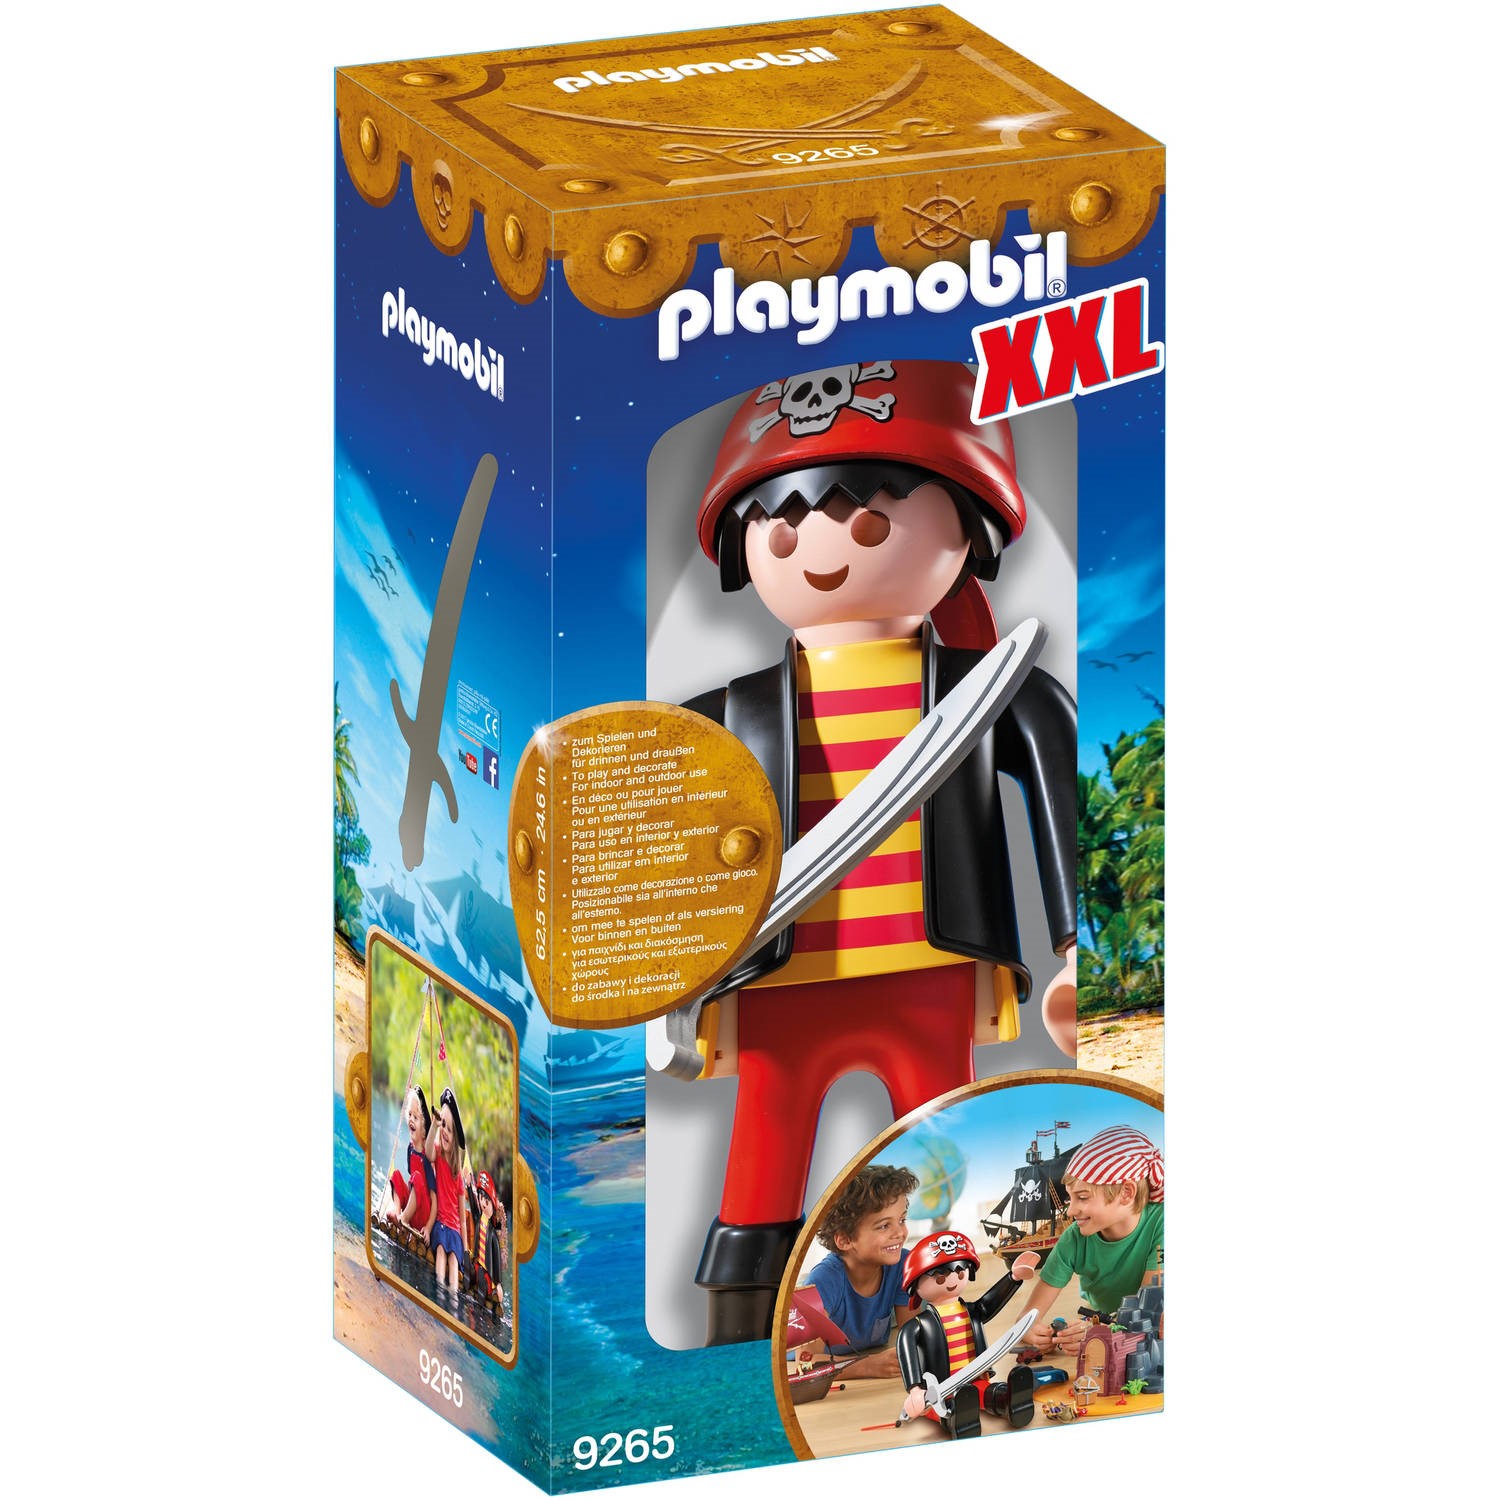 Playmobil #9265 XXL Pirate - New Factory Sealed - Walmart.com